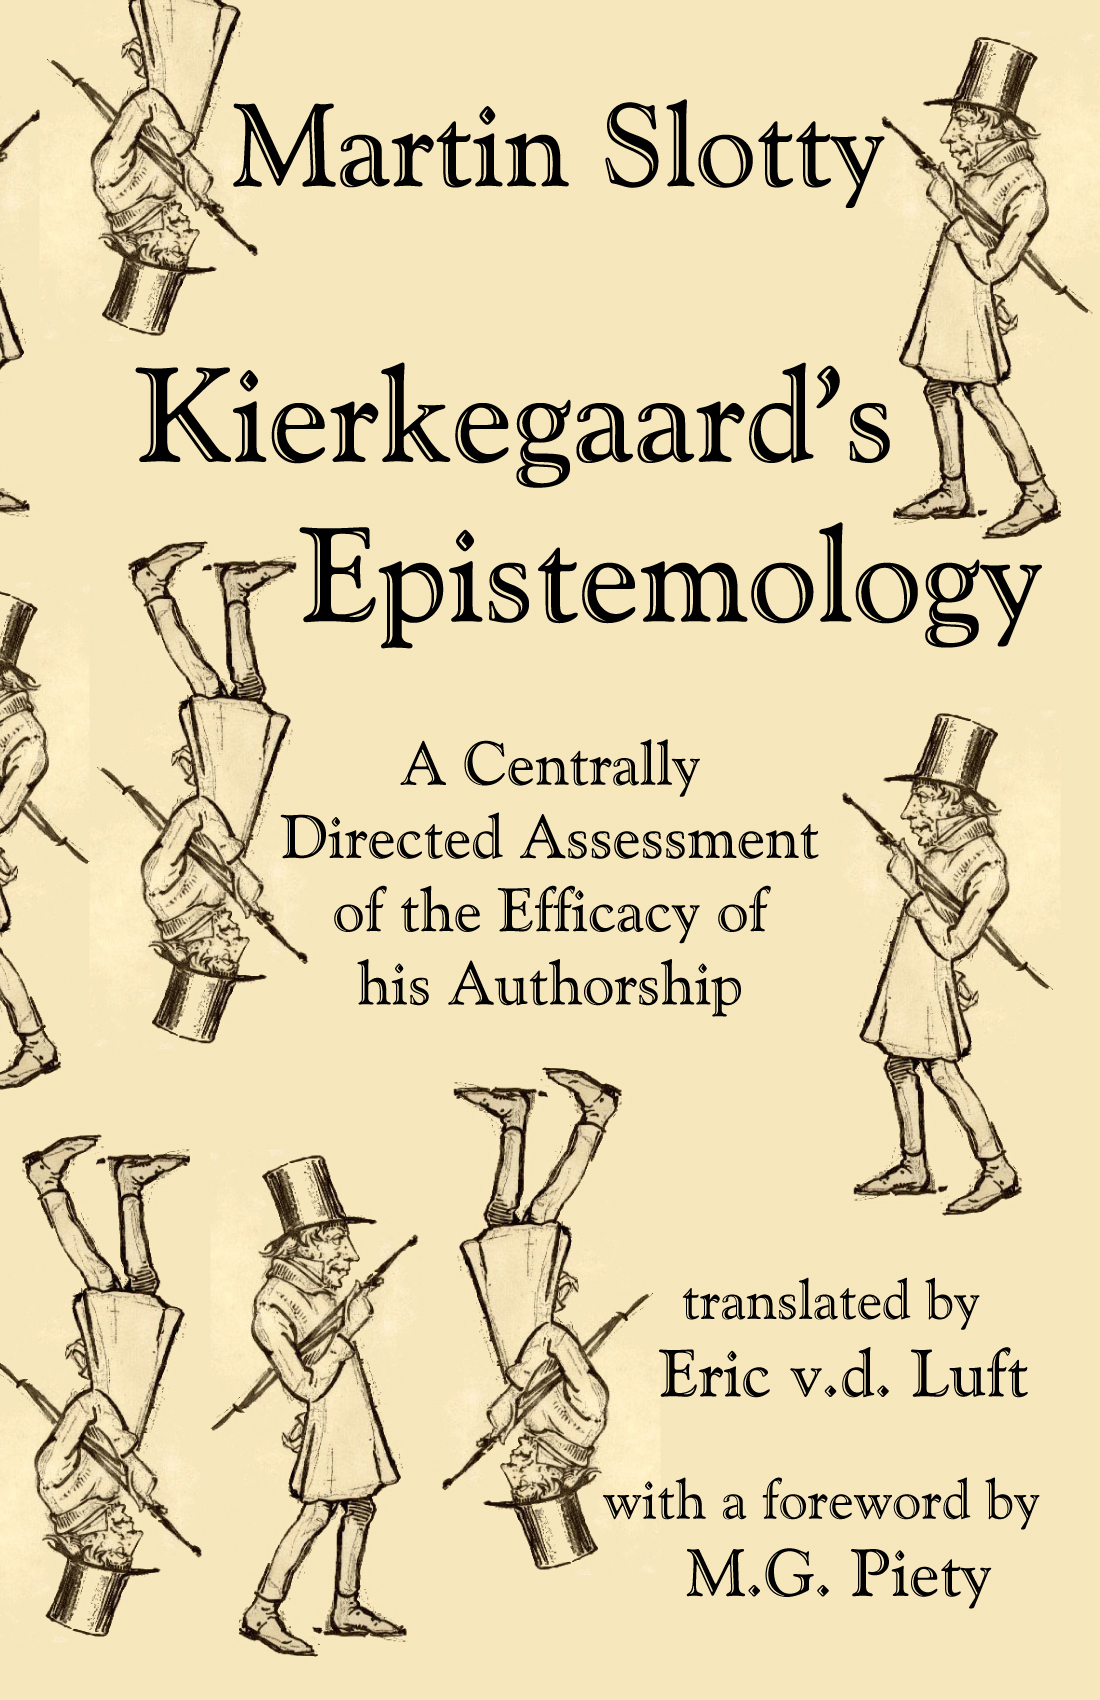 Kierkegaard's Epistemology by Martin Slotty